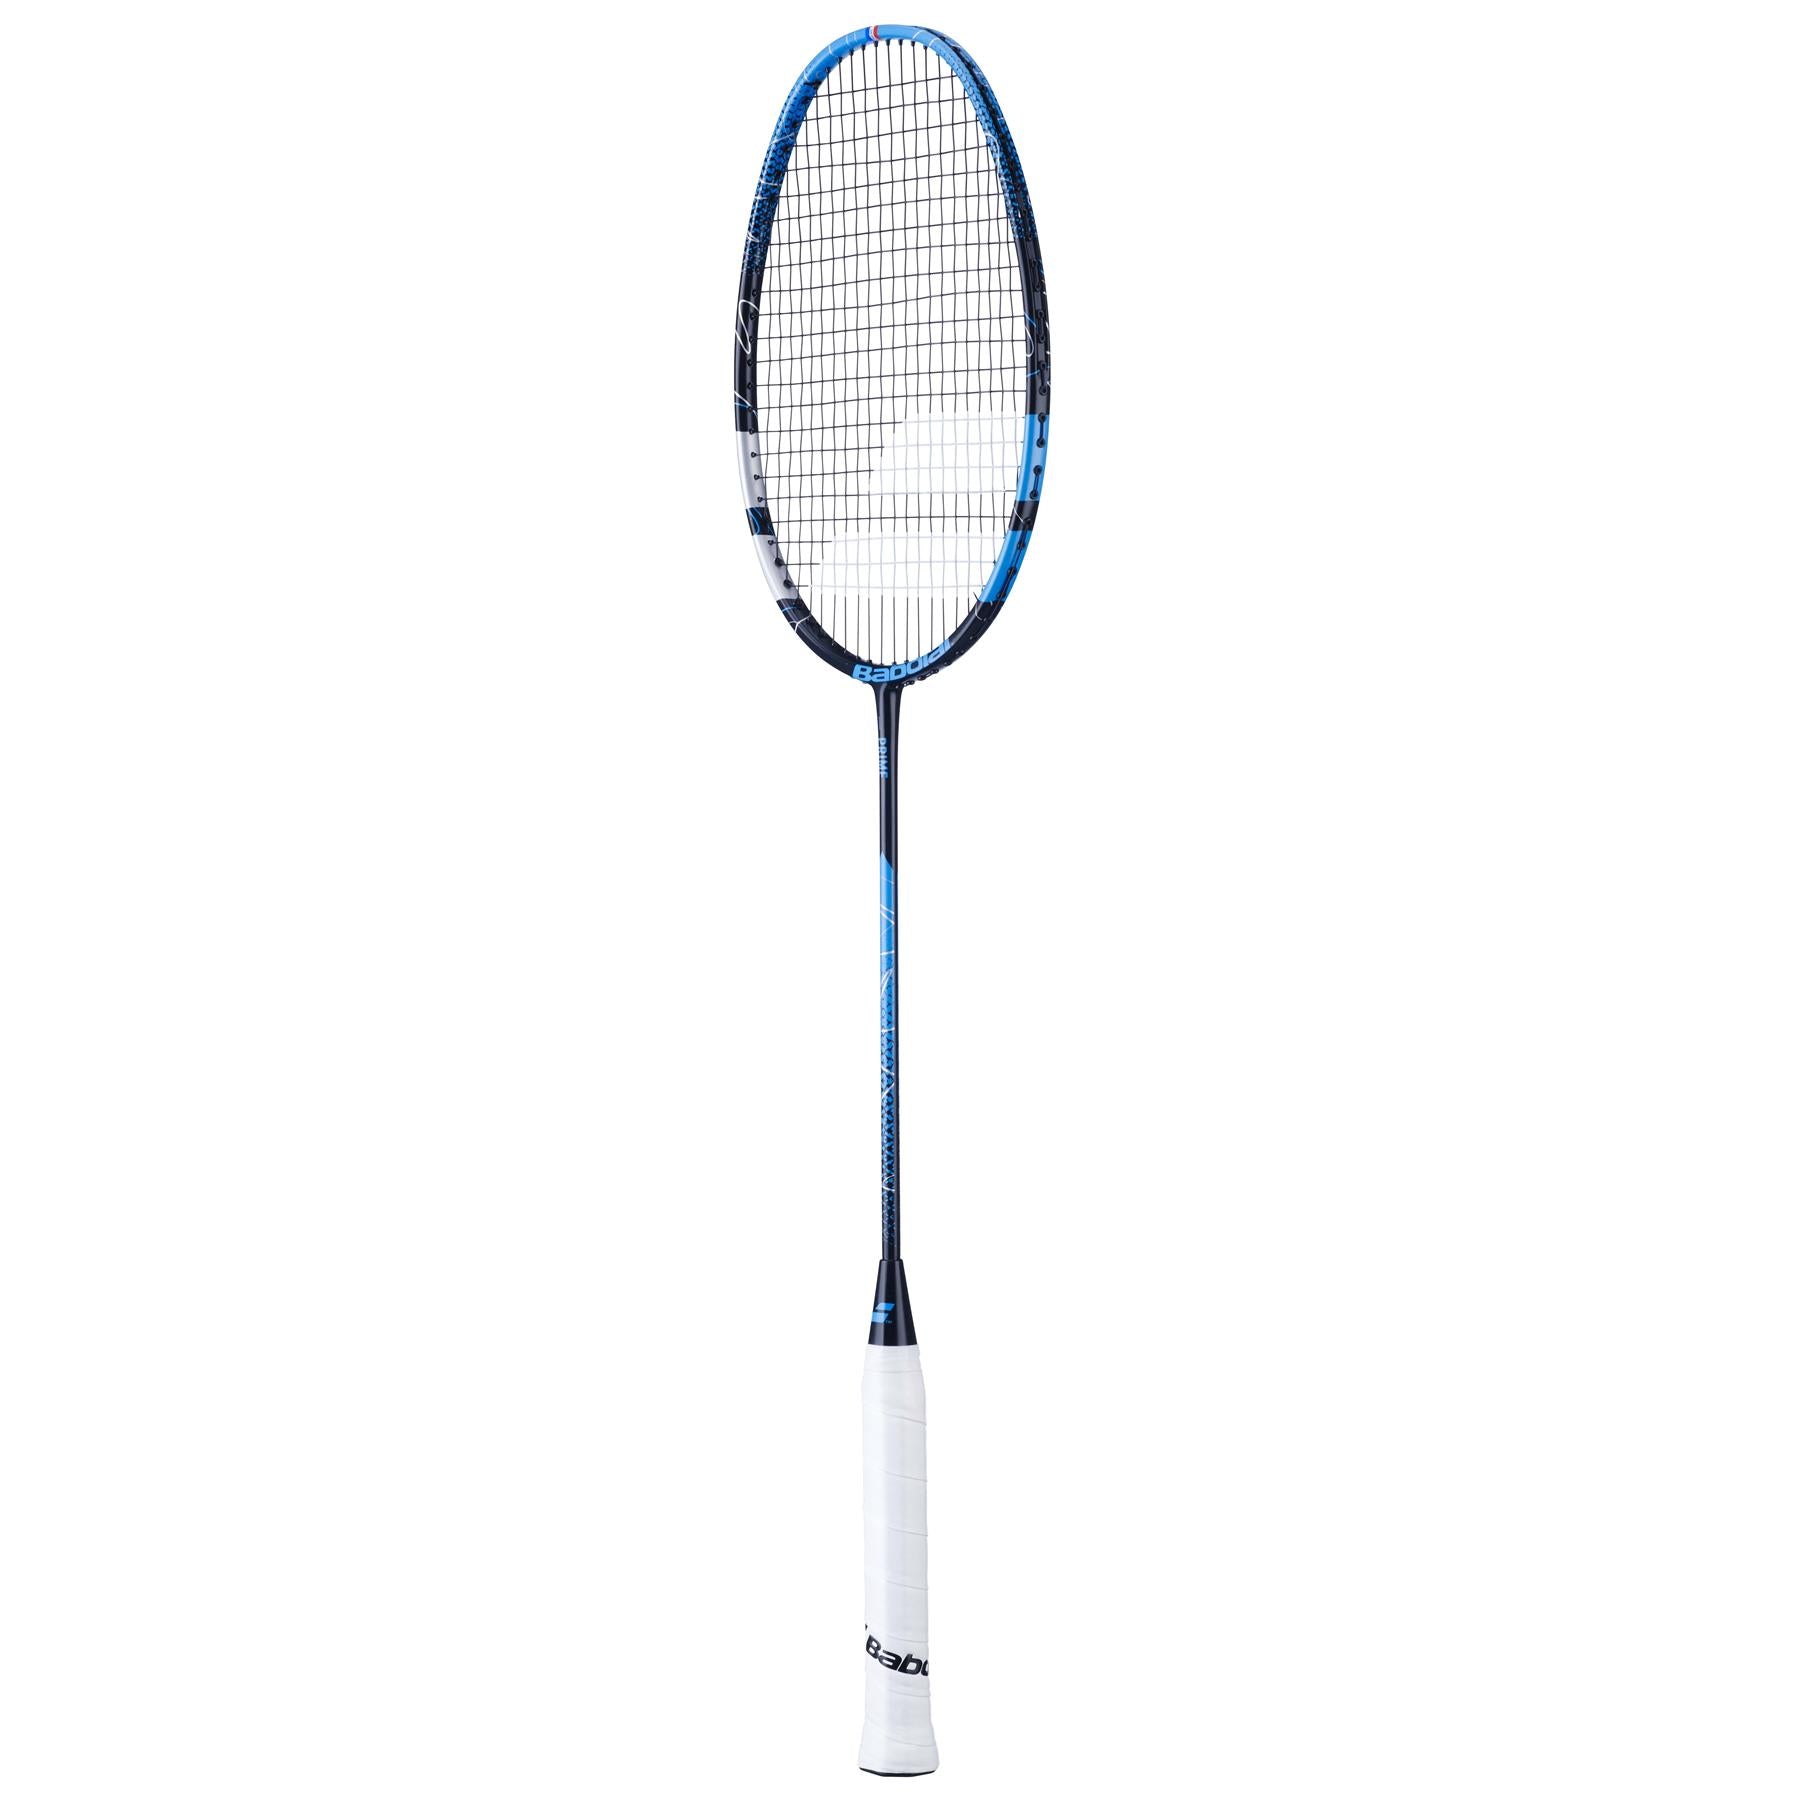 Babolat Prime Junior Badminton Racket - Blue / Black - Left